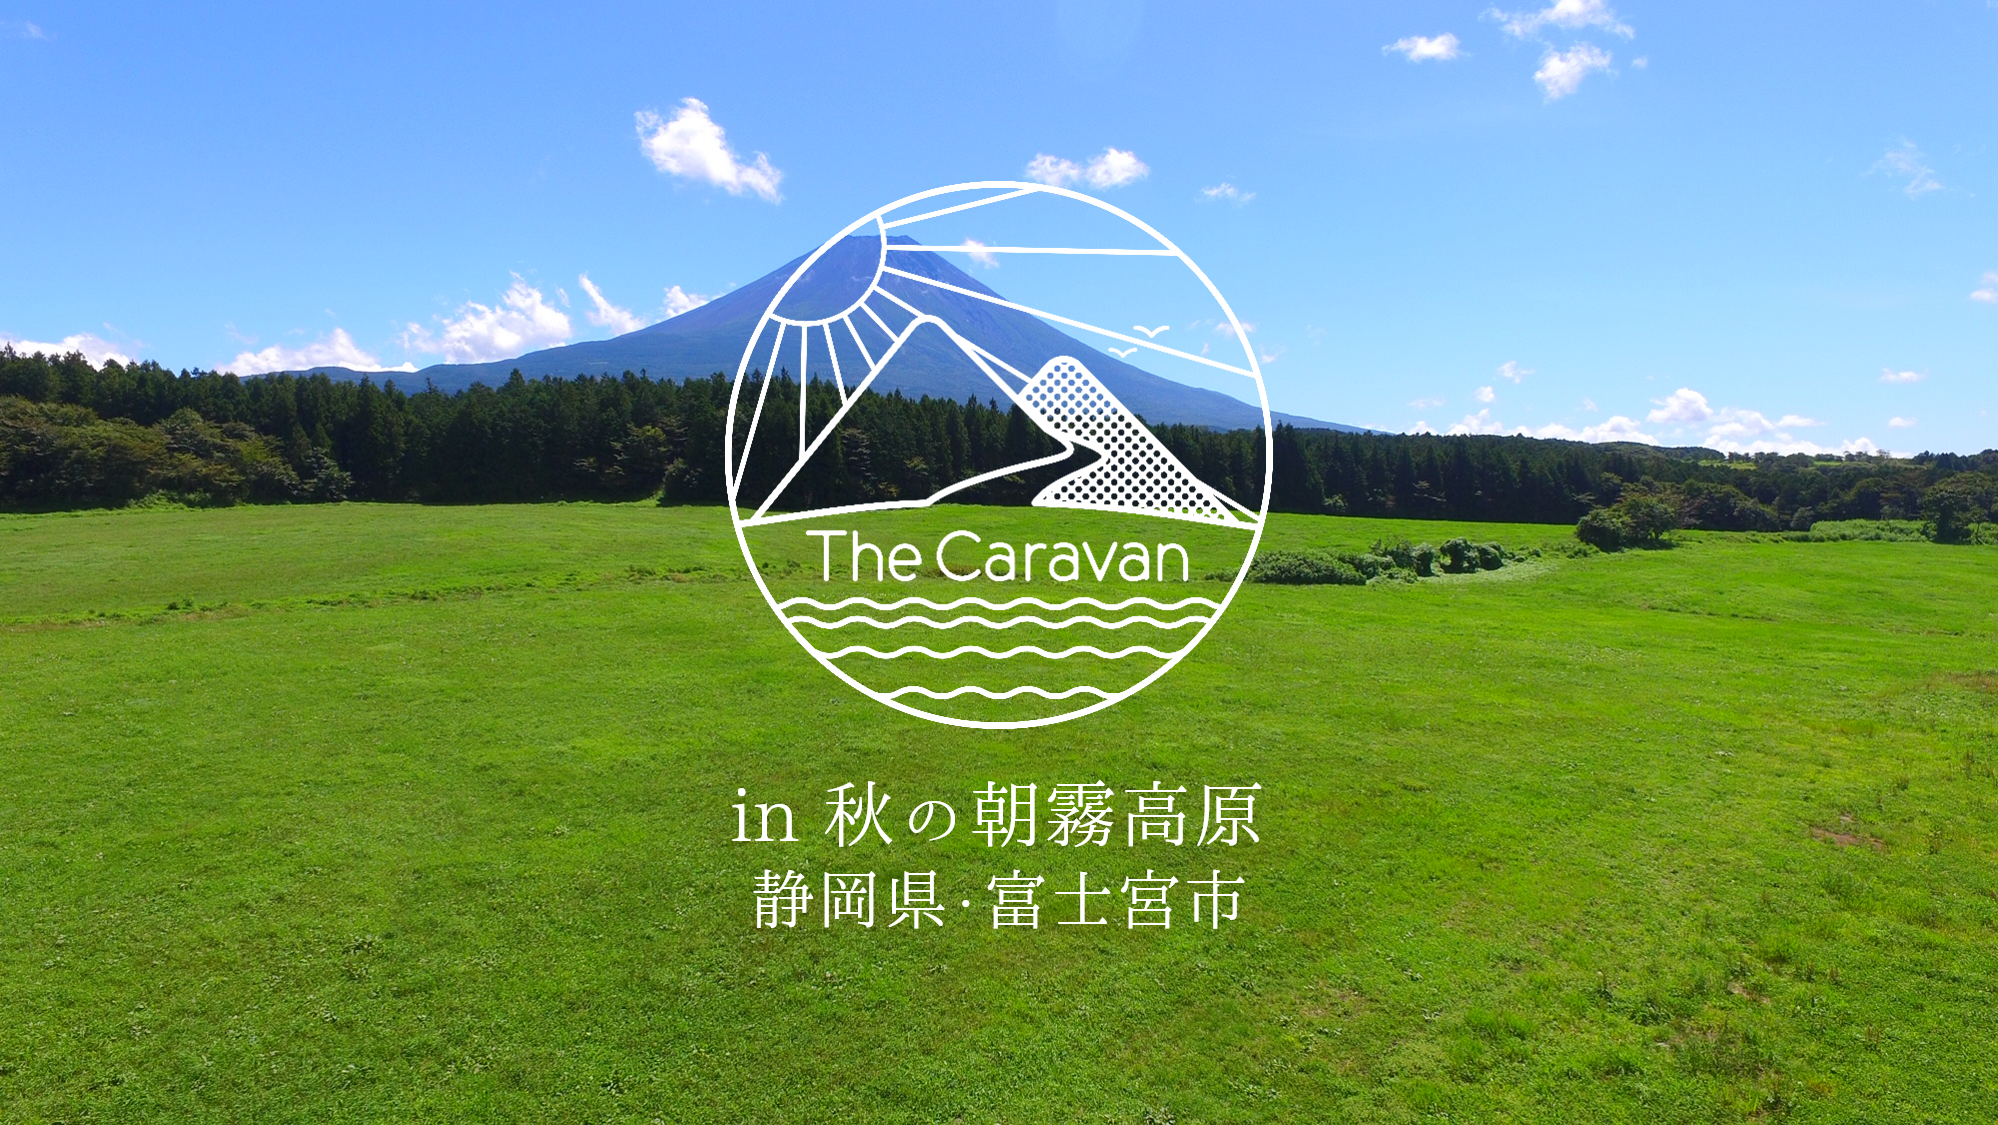 - The Caravan in 秋の朝霧高原